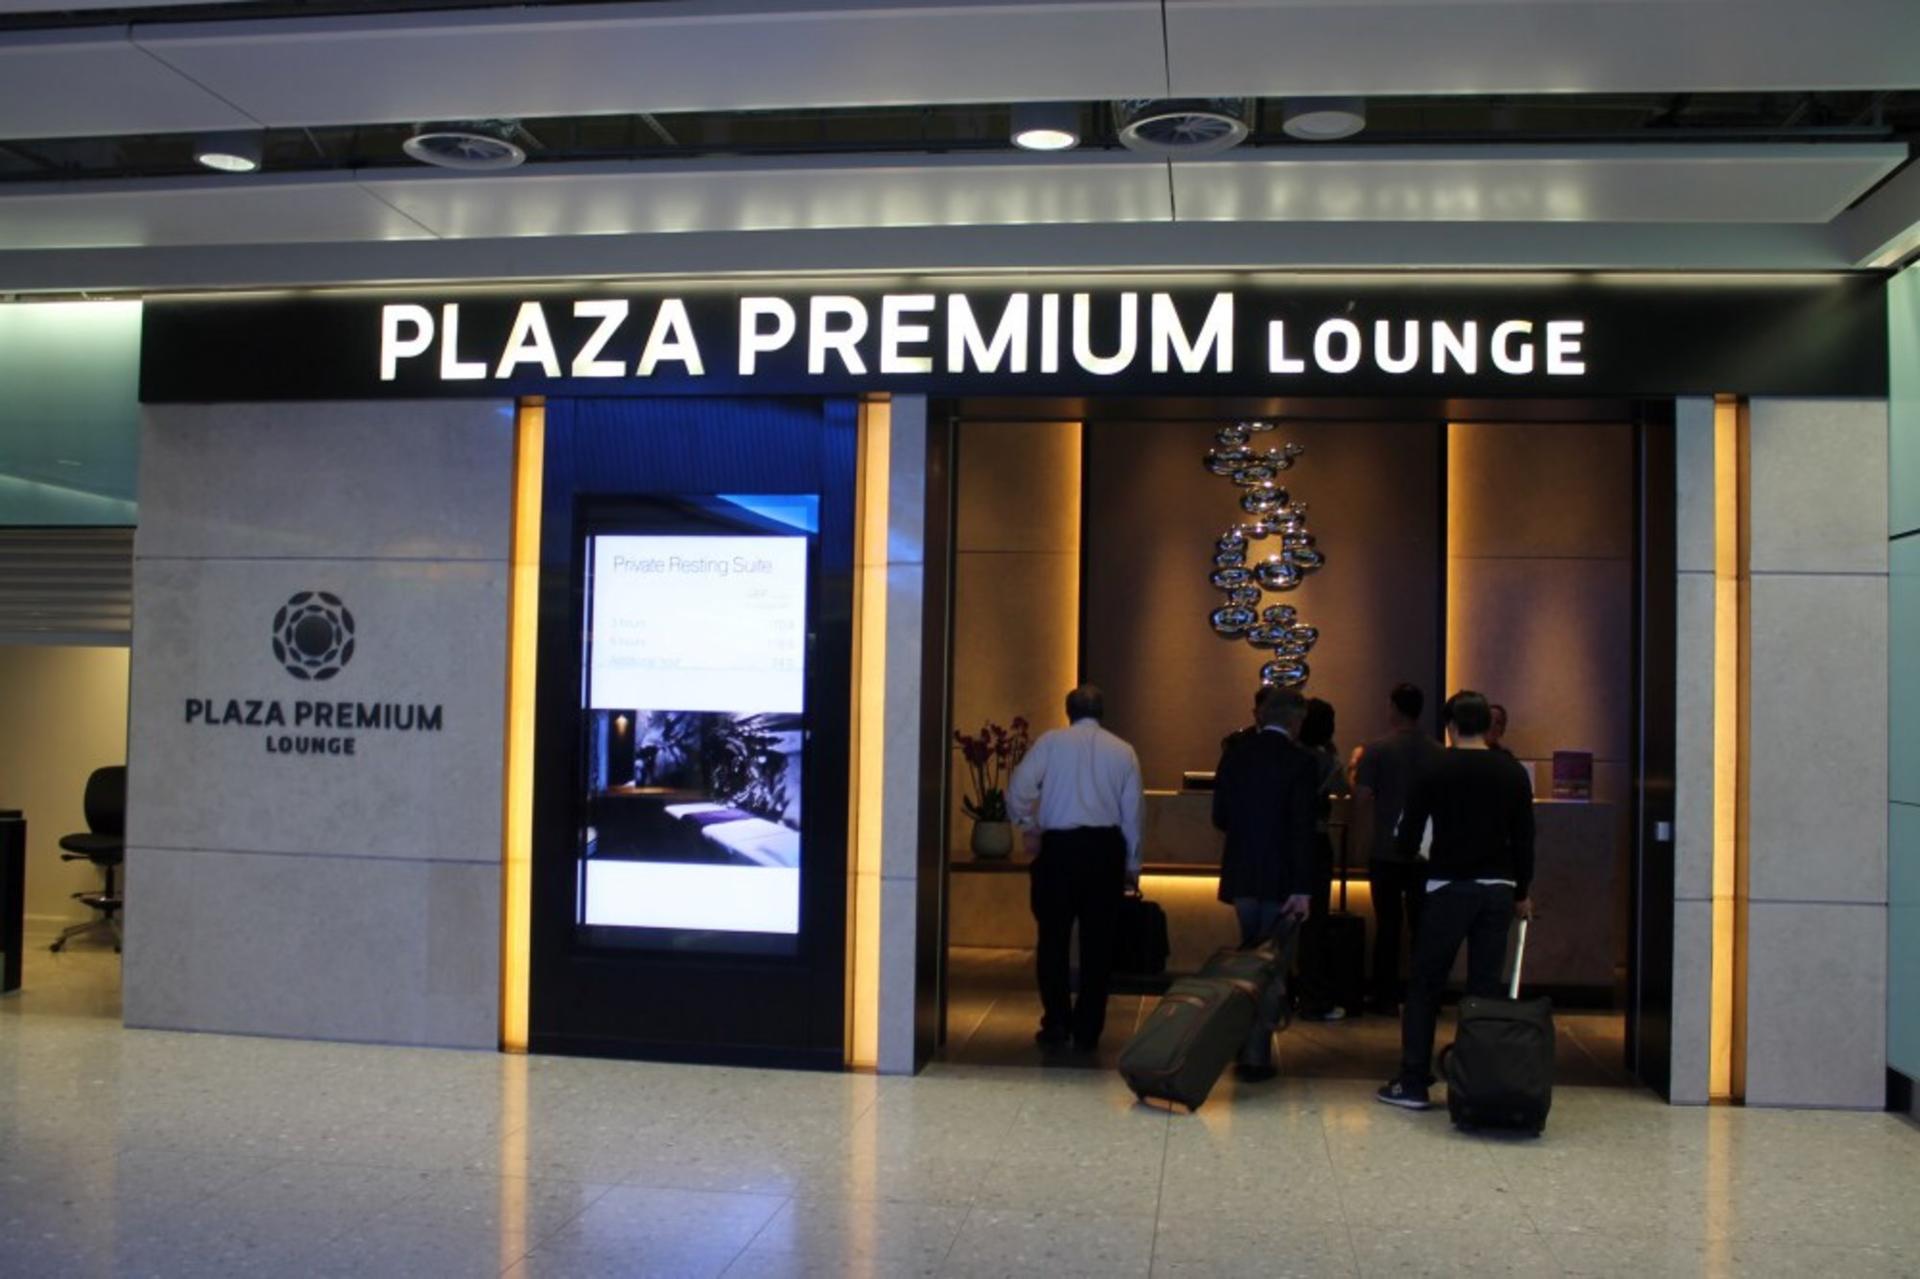 Plaza Premium Lounge image 33 of 68